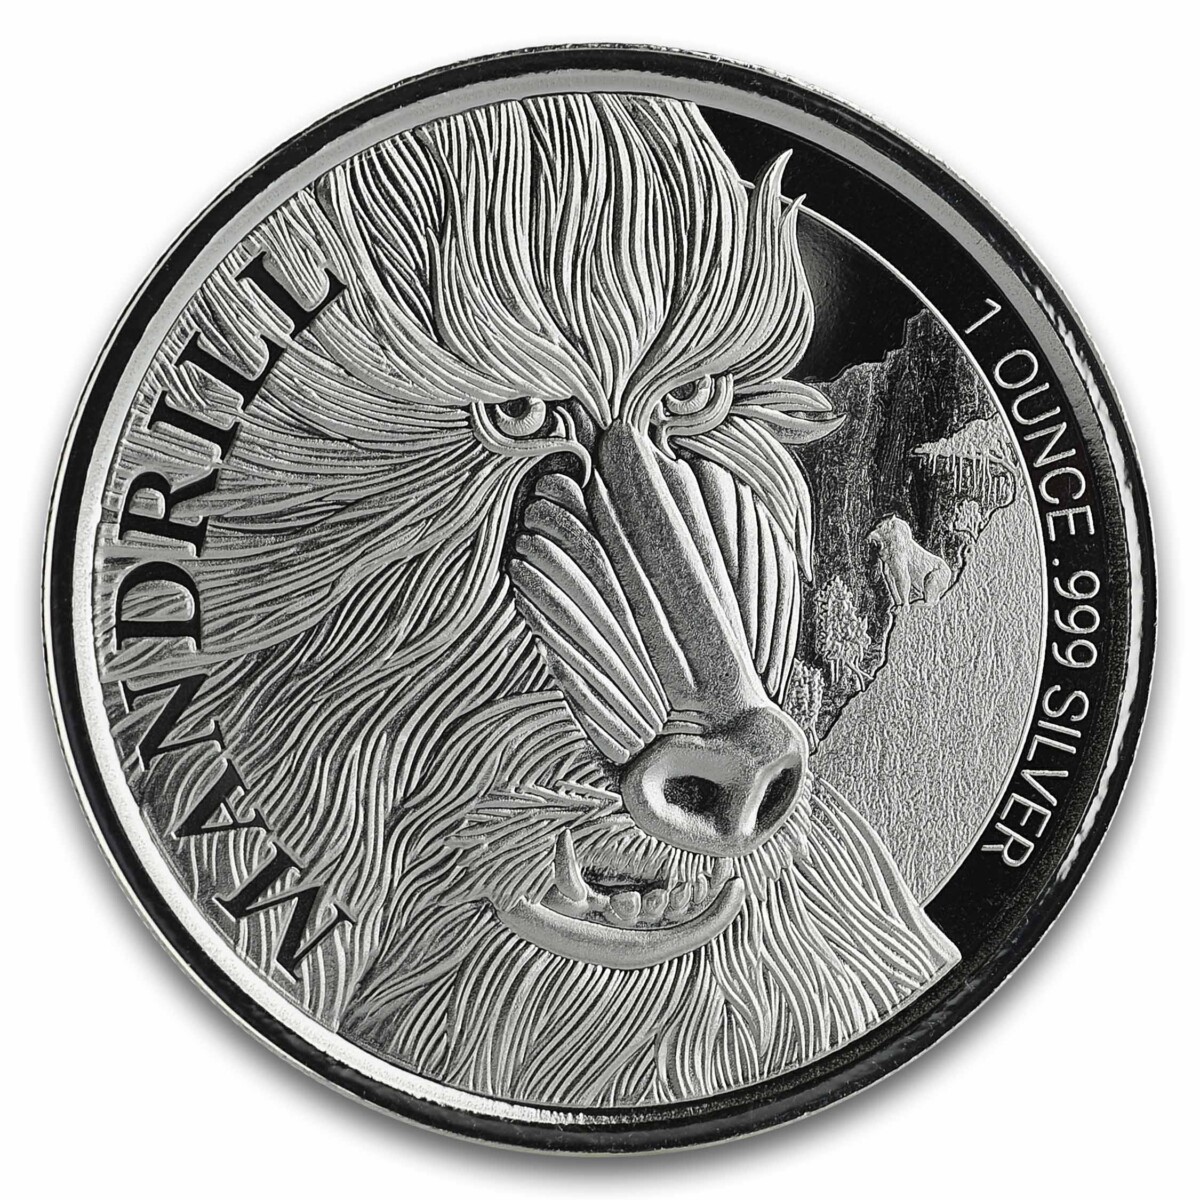 MANDRILL 2020 Cameroon 1oz Silver Bullion Coin